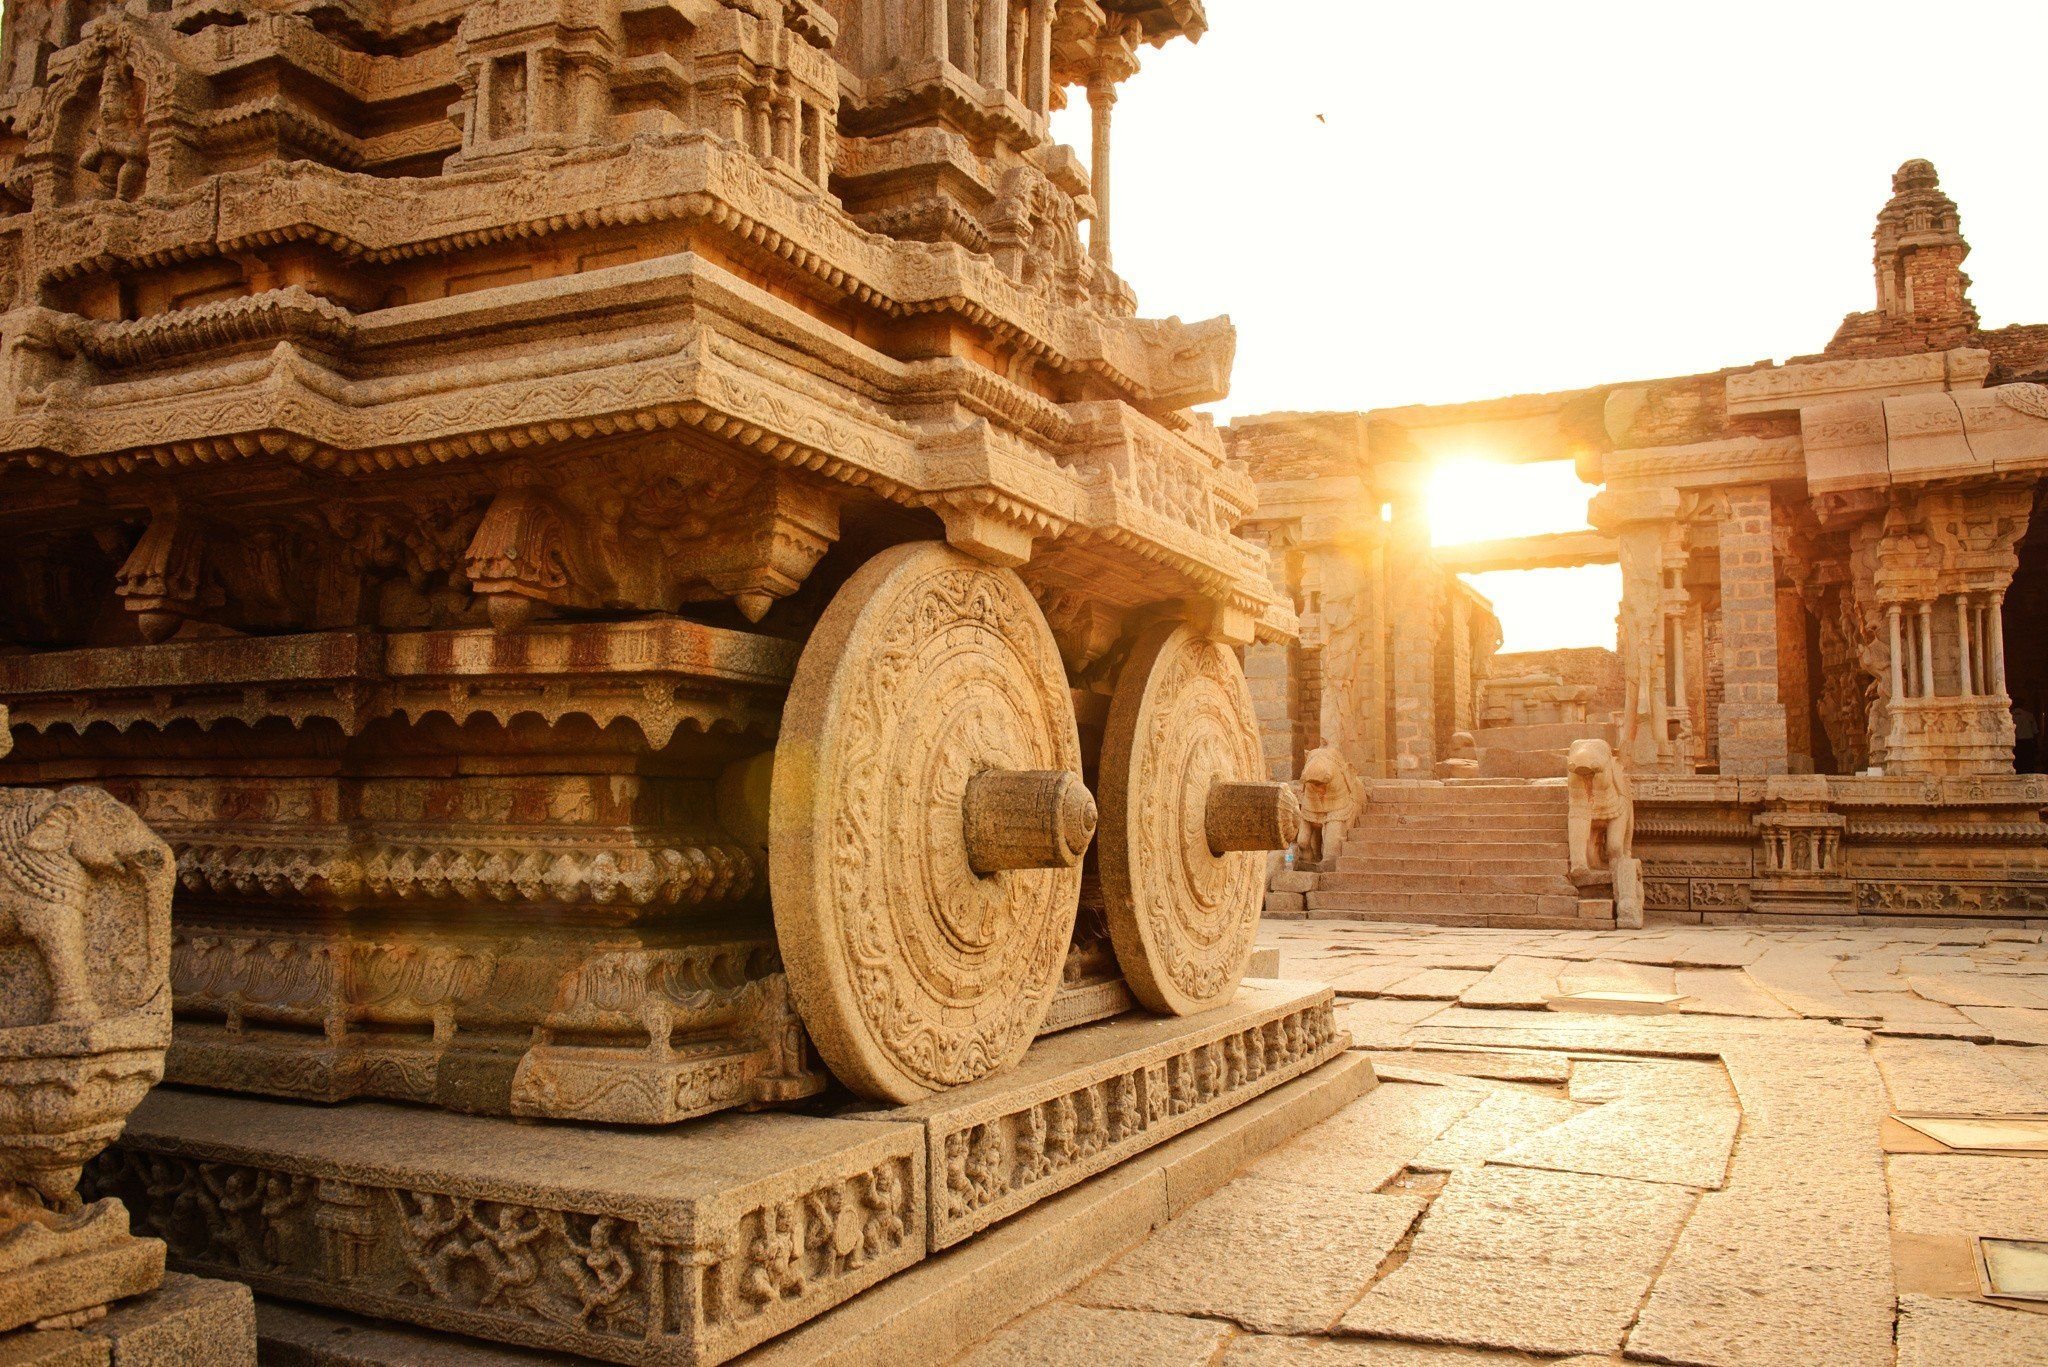 photography, India, Temple, Sun, Asian architecture, Architecture